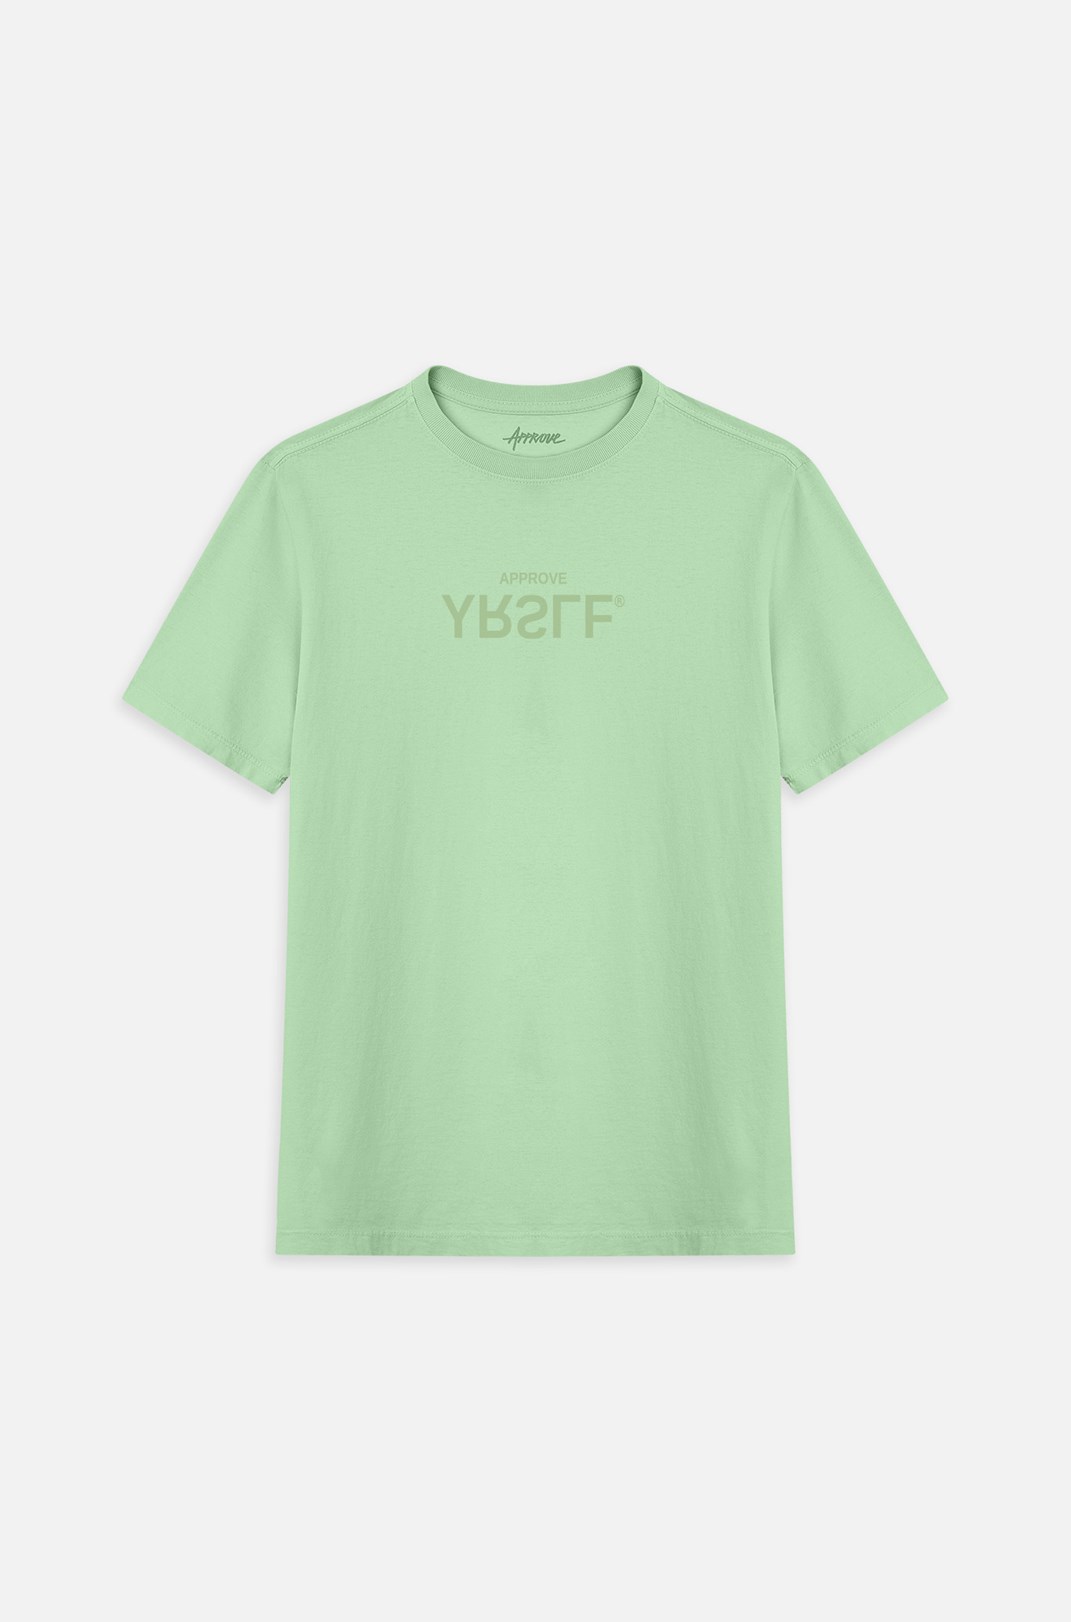 Camiseta Bold Approve Yrslf Inverse Collors Verde Menta